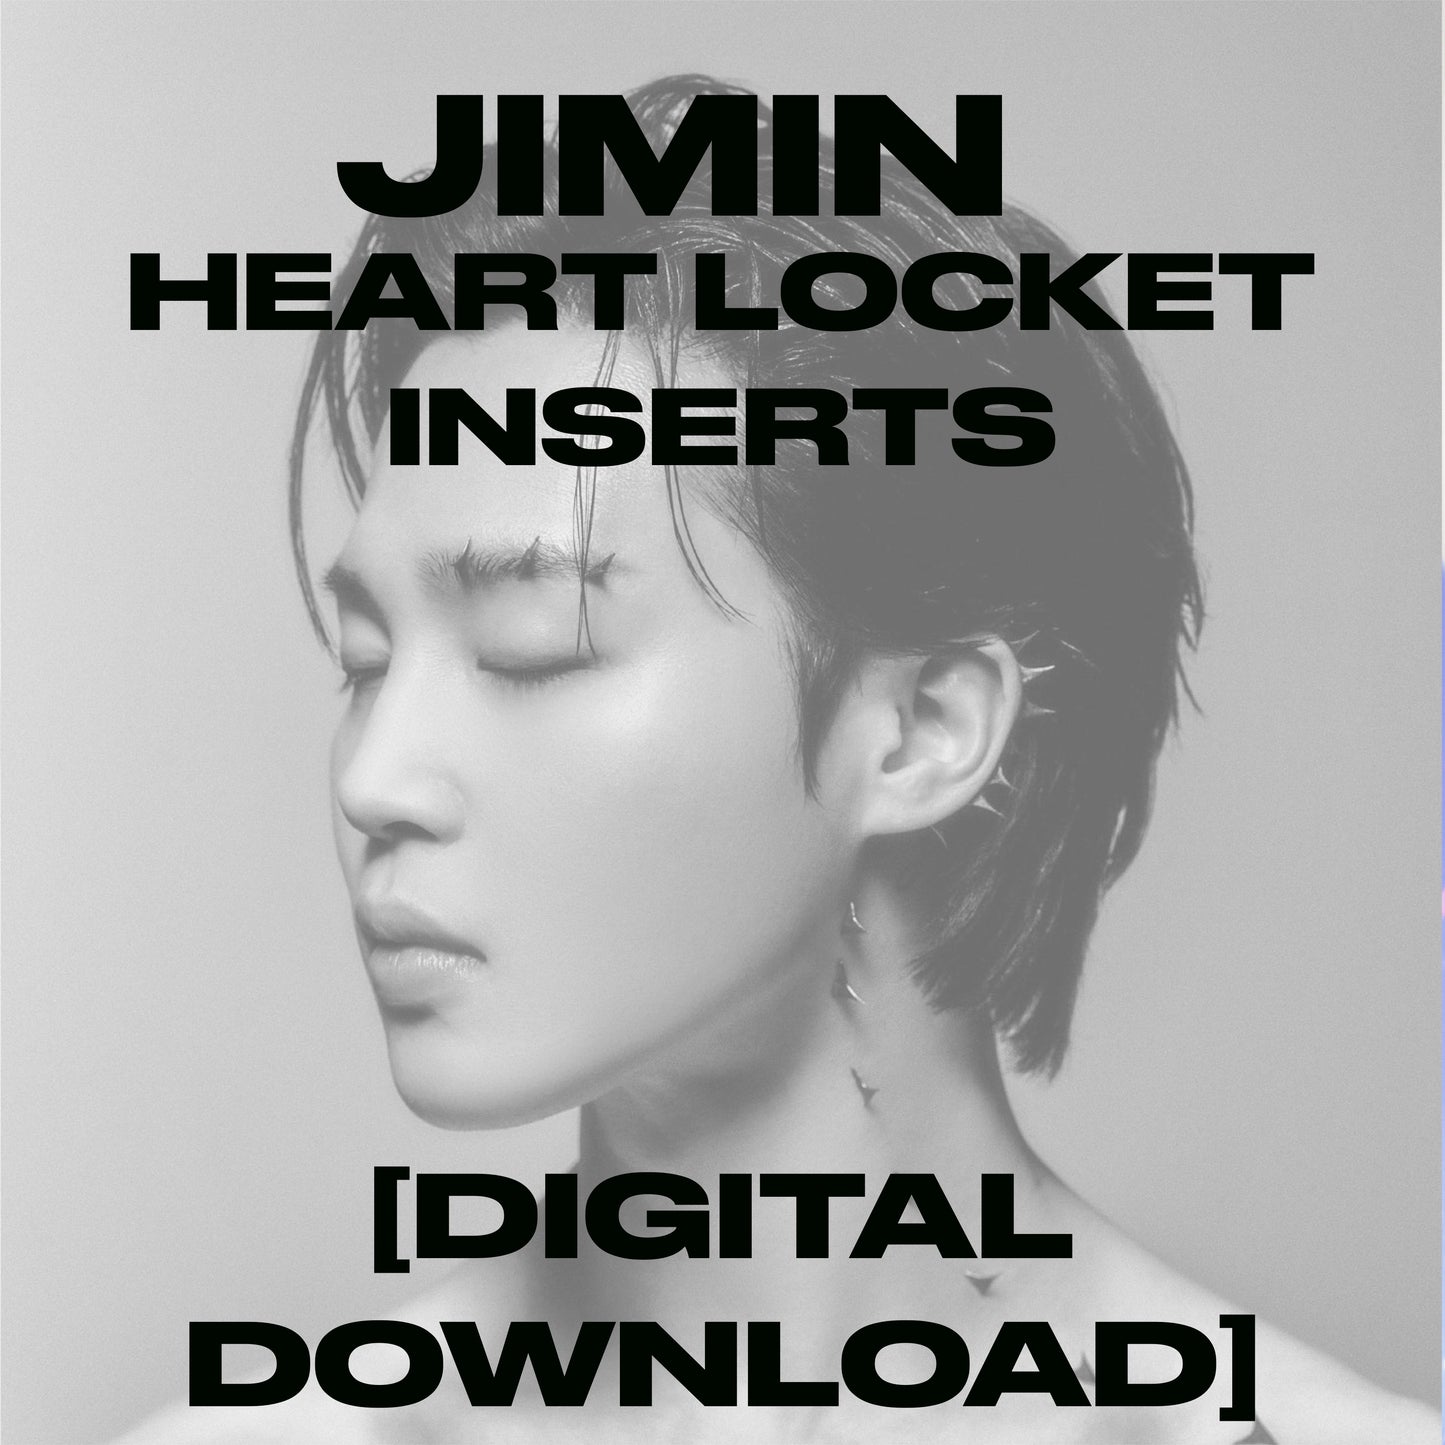 Jimin Heart Locket Inserts [DIGITAL DOWNLOAD]